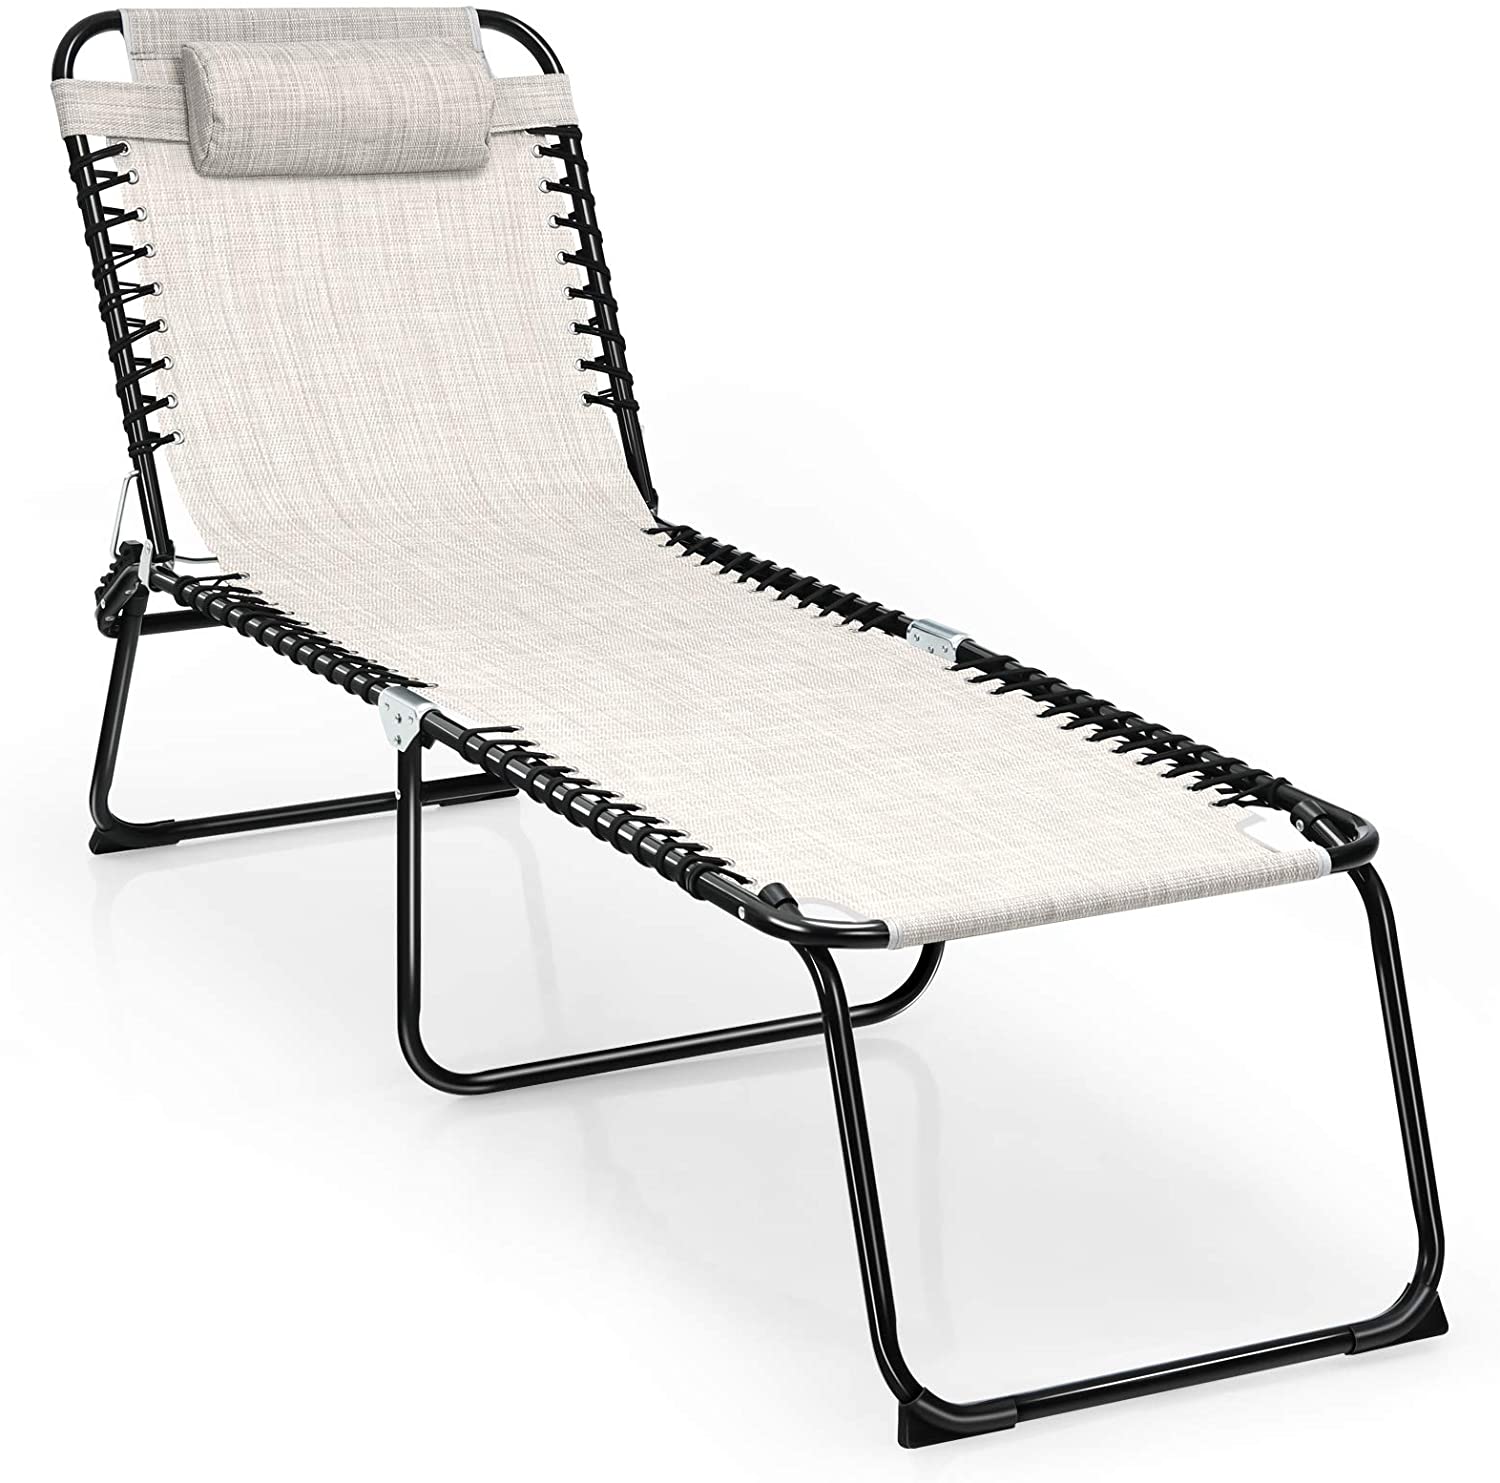 Patio Chaise Lounge Chair Outdoor Beach Chair for Yard